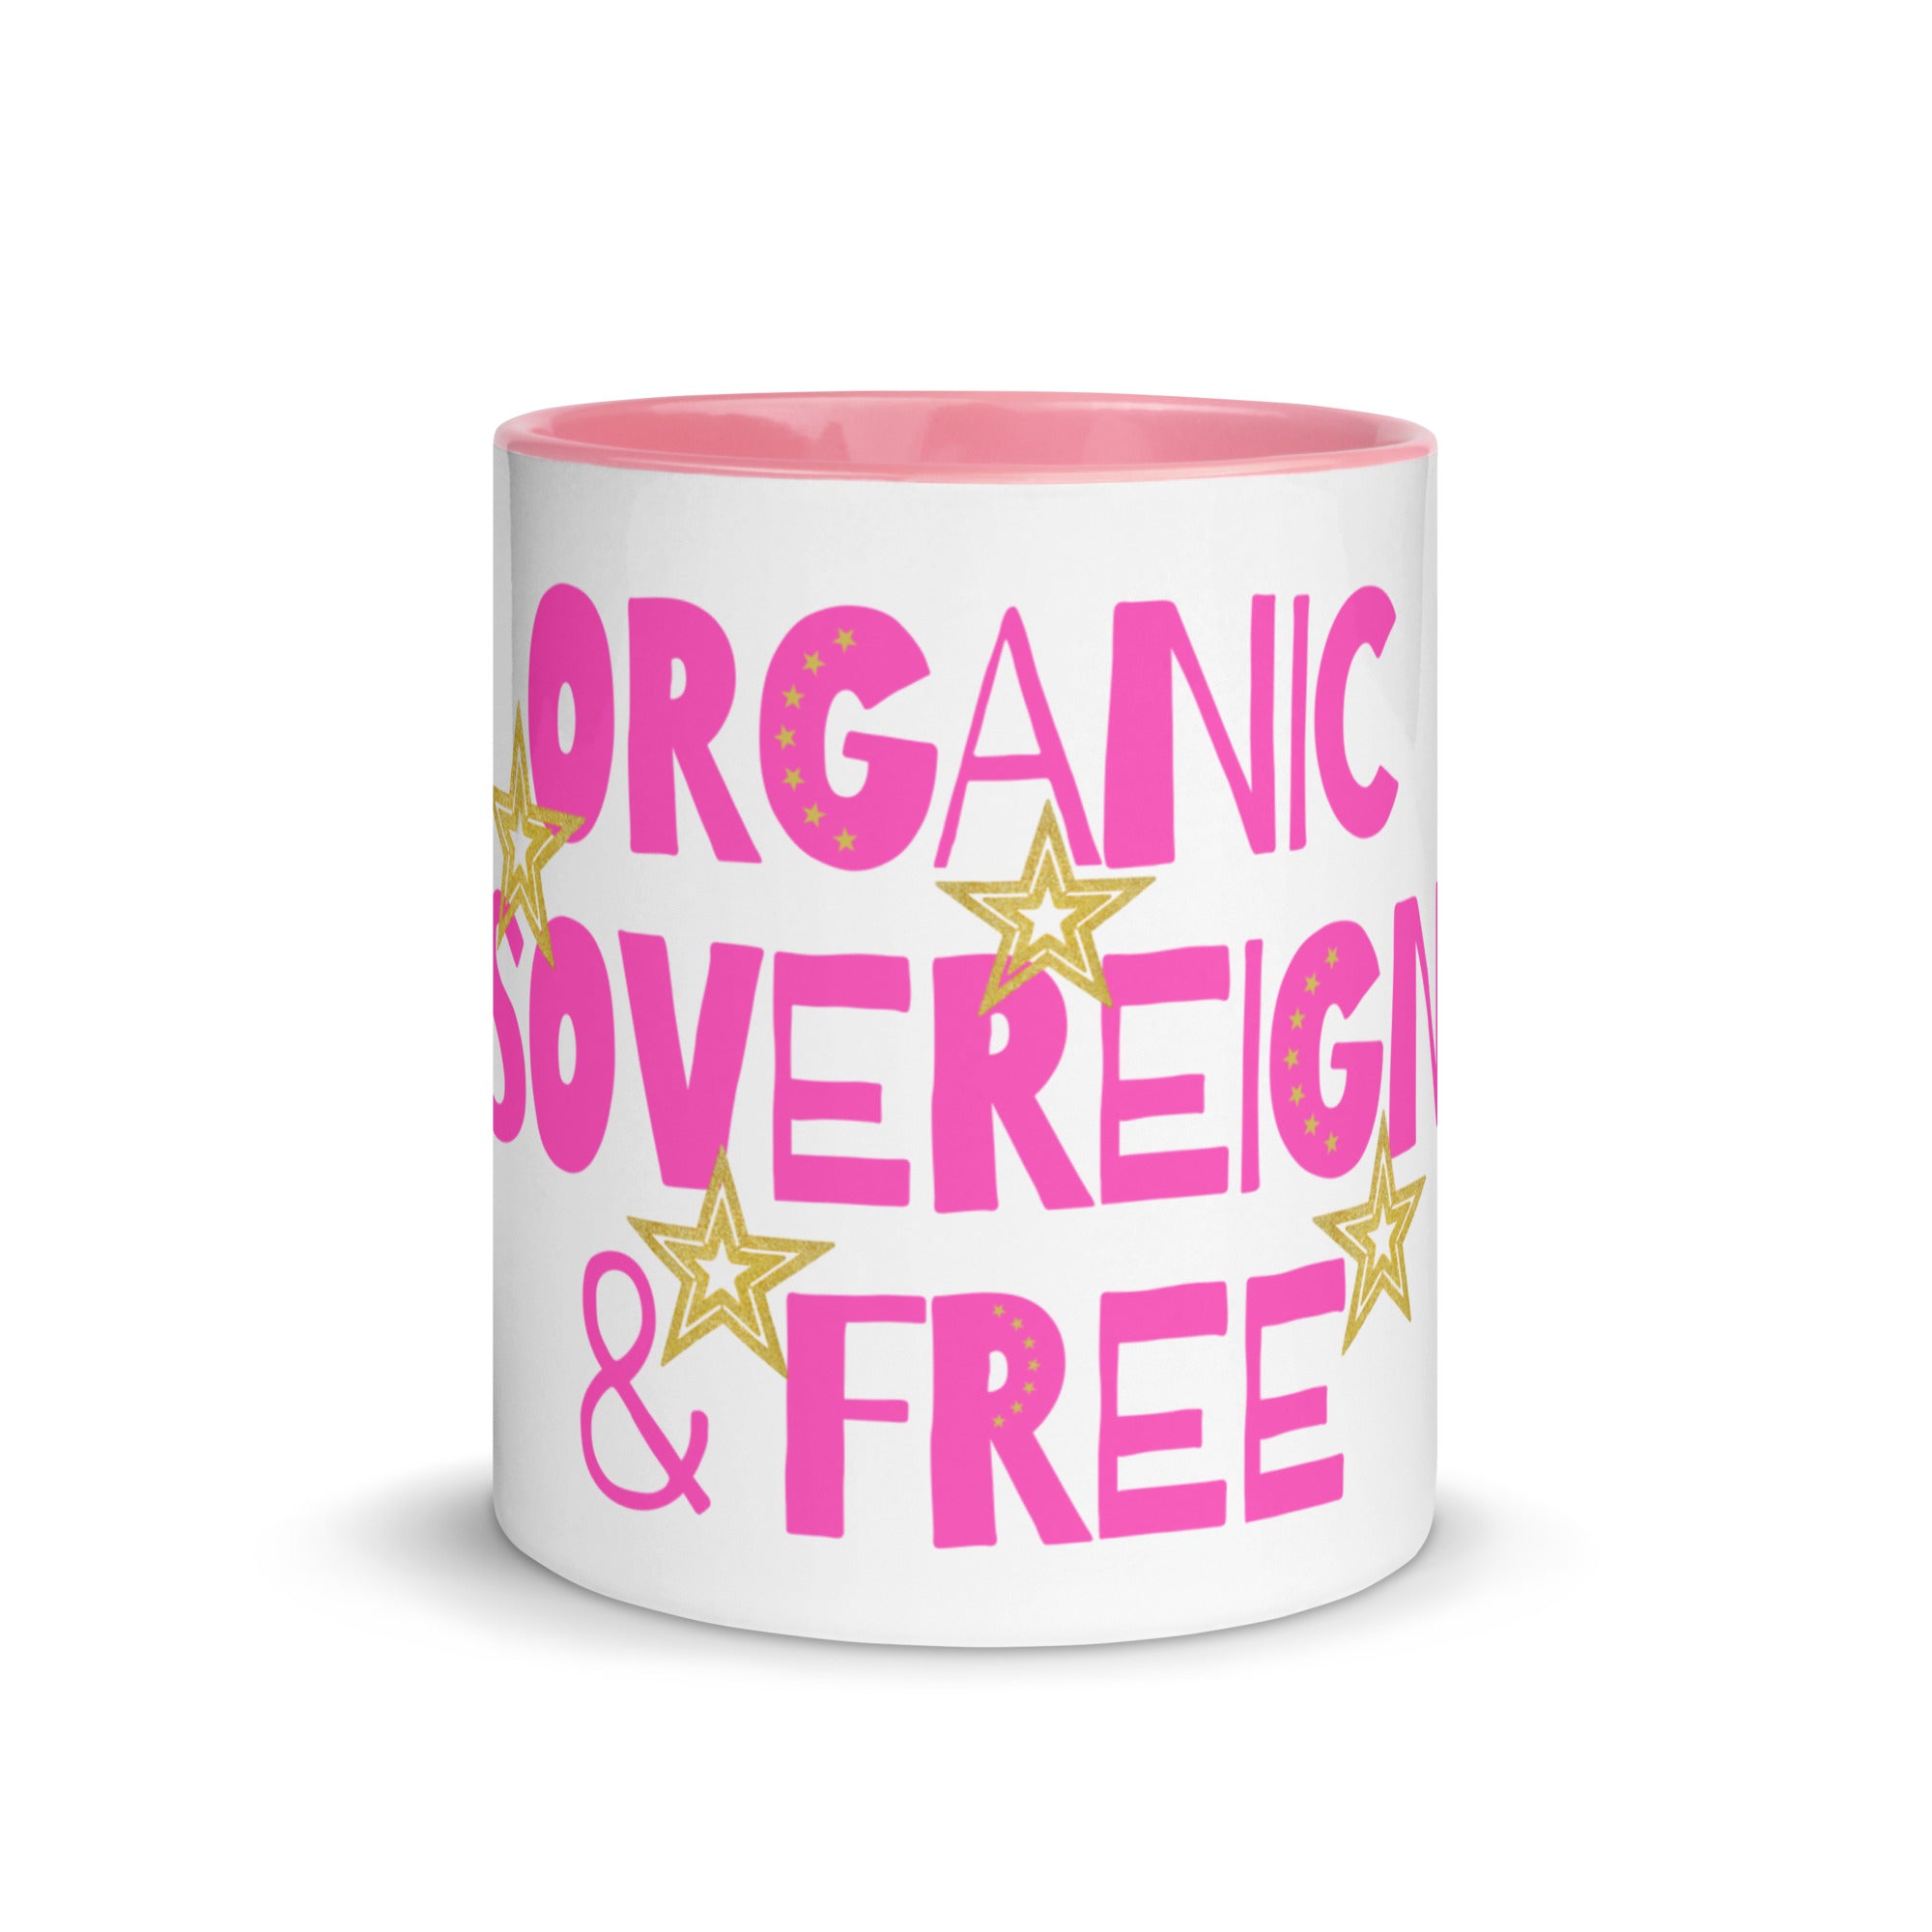 Organic Sovereign & Free Mug with Colour Inside